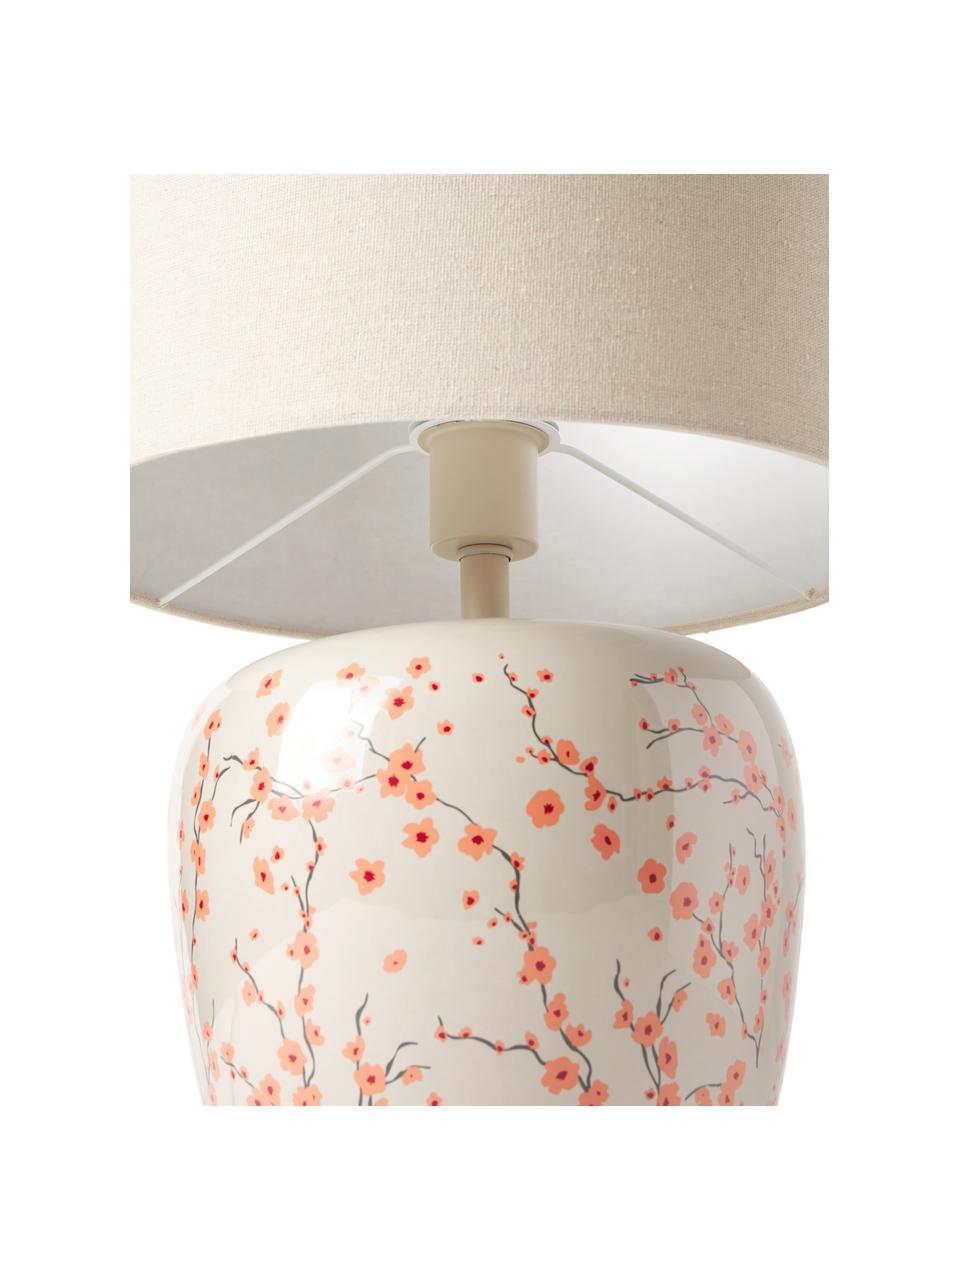 Lampada da tavolo grande in ceramica Eileen, Paralume: 100% poliestere, Base della lampada: ceramica, Beige, rosa, lucido, Ø 33 x Alt. 48 cm